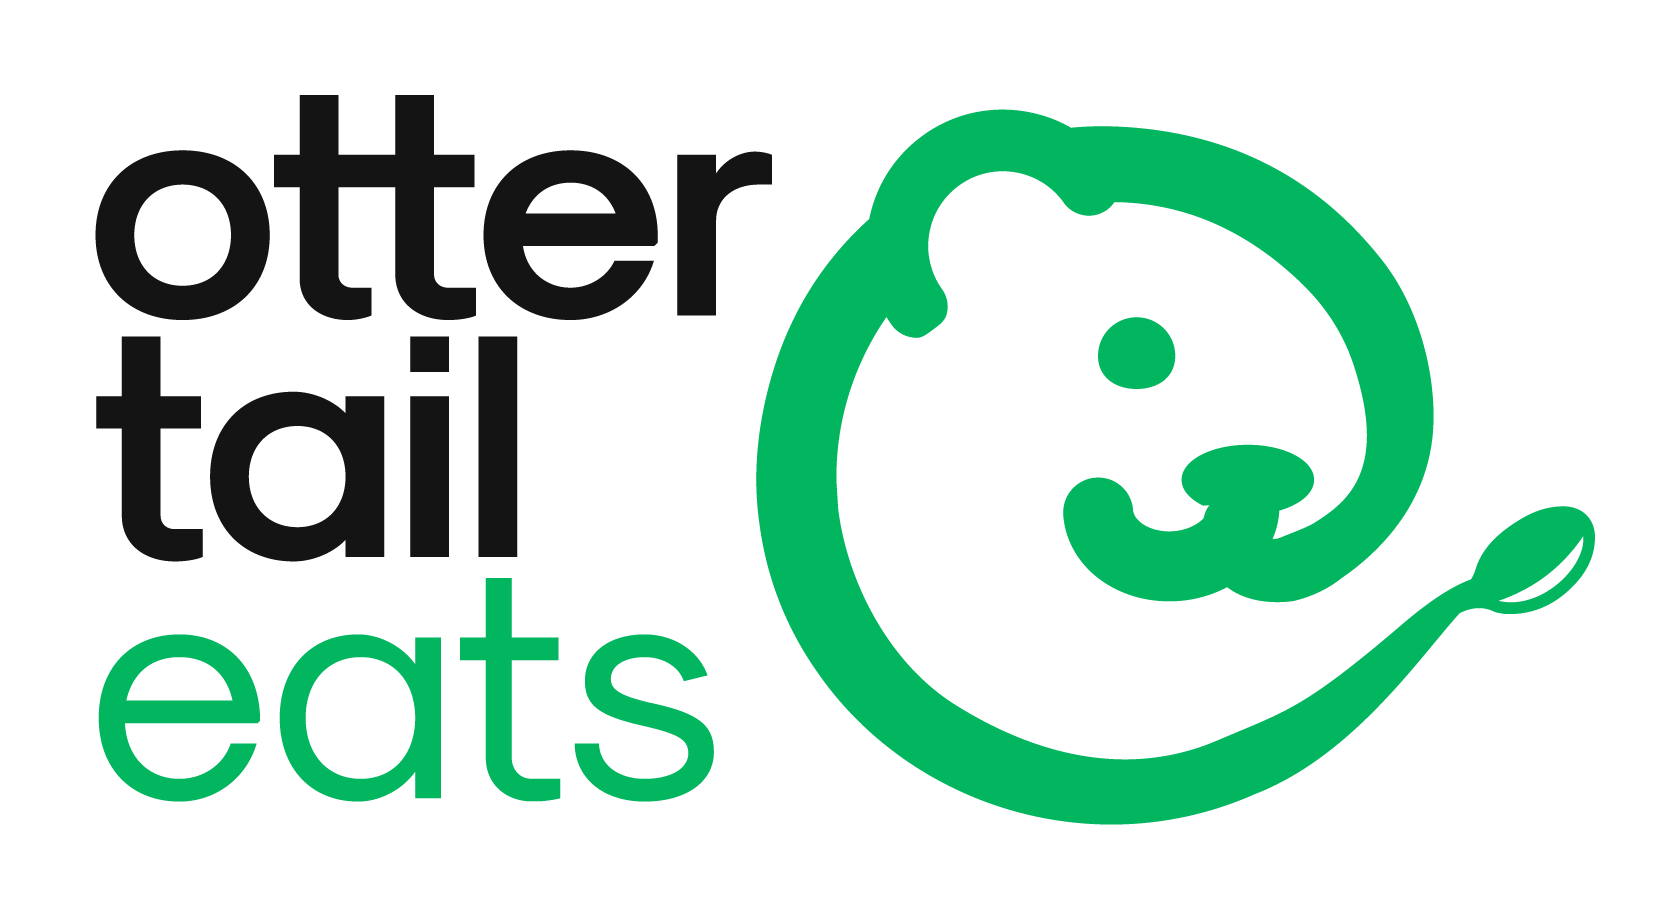 Otter Tail Eats Logo 2